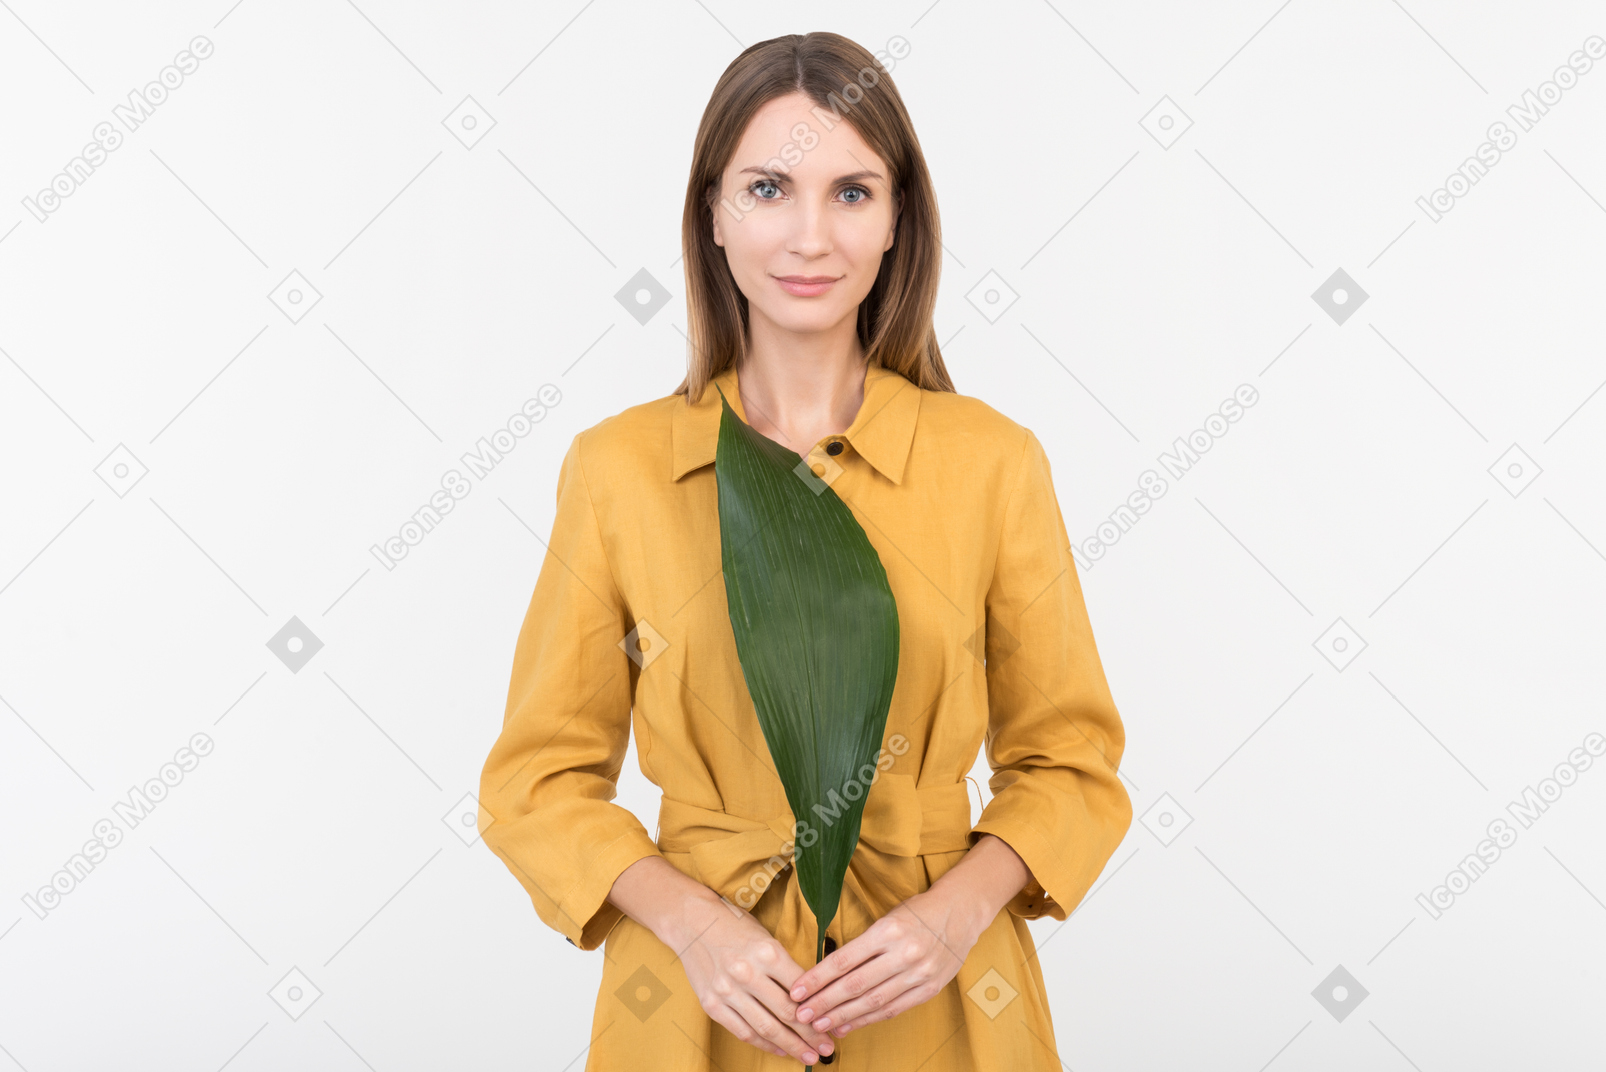 Jeune femme tenant une feuille verte